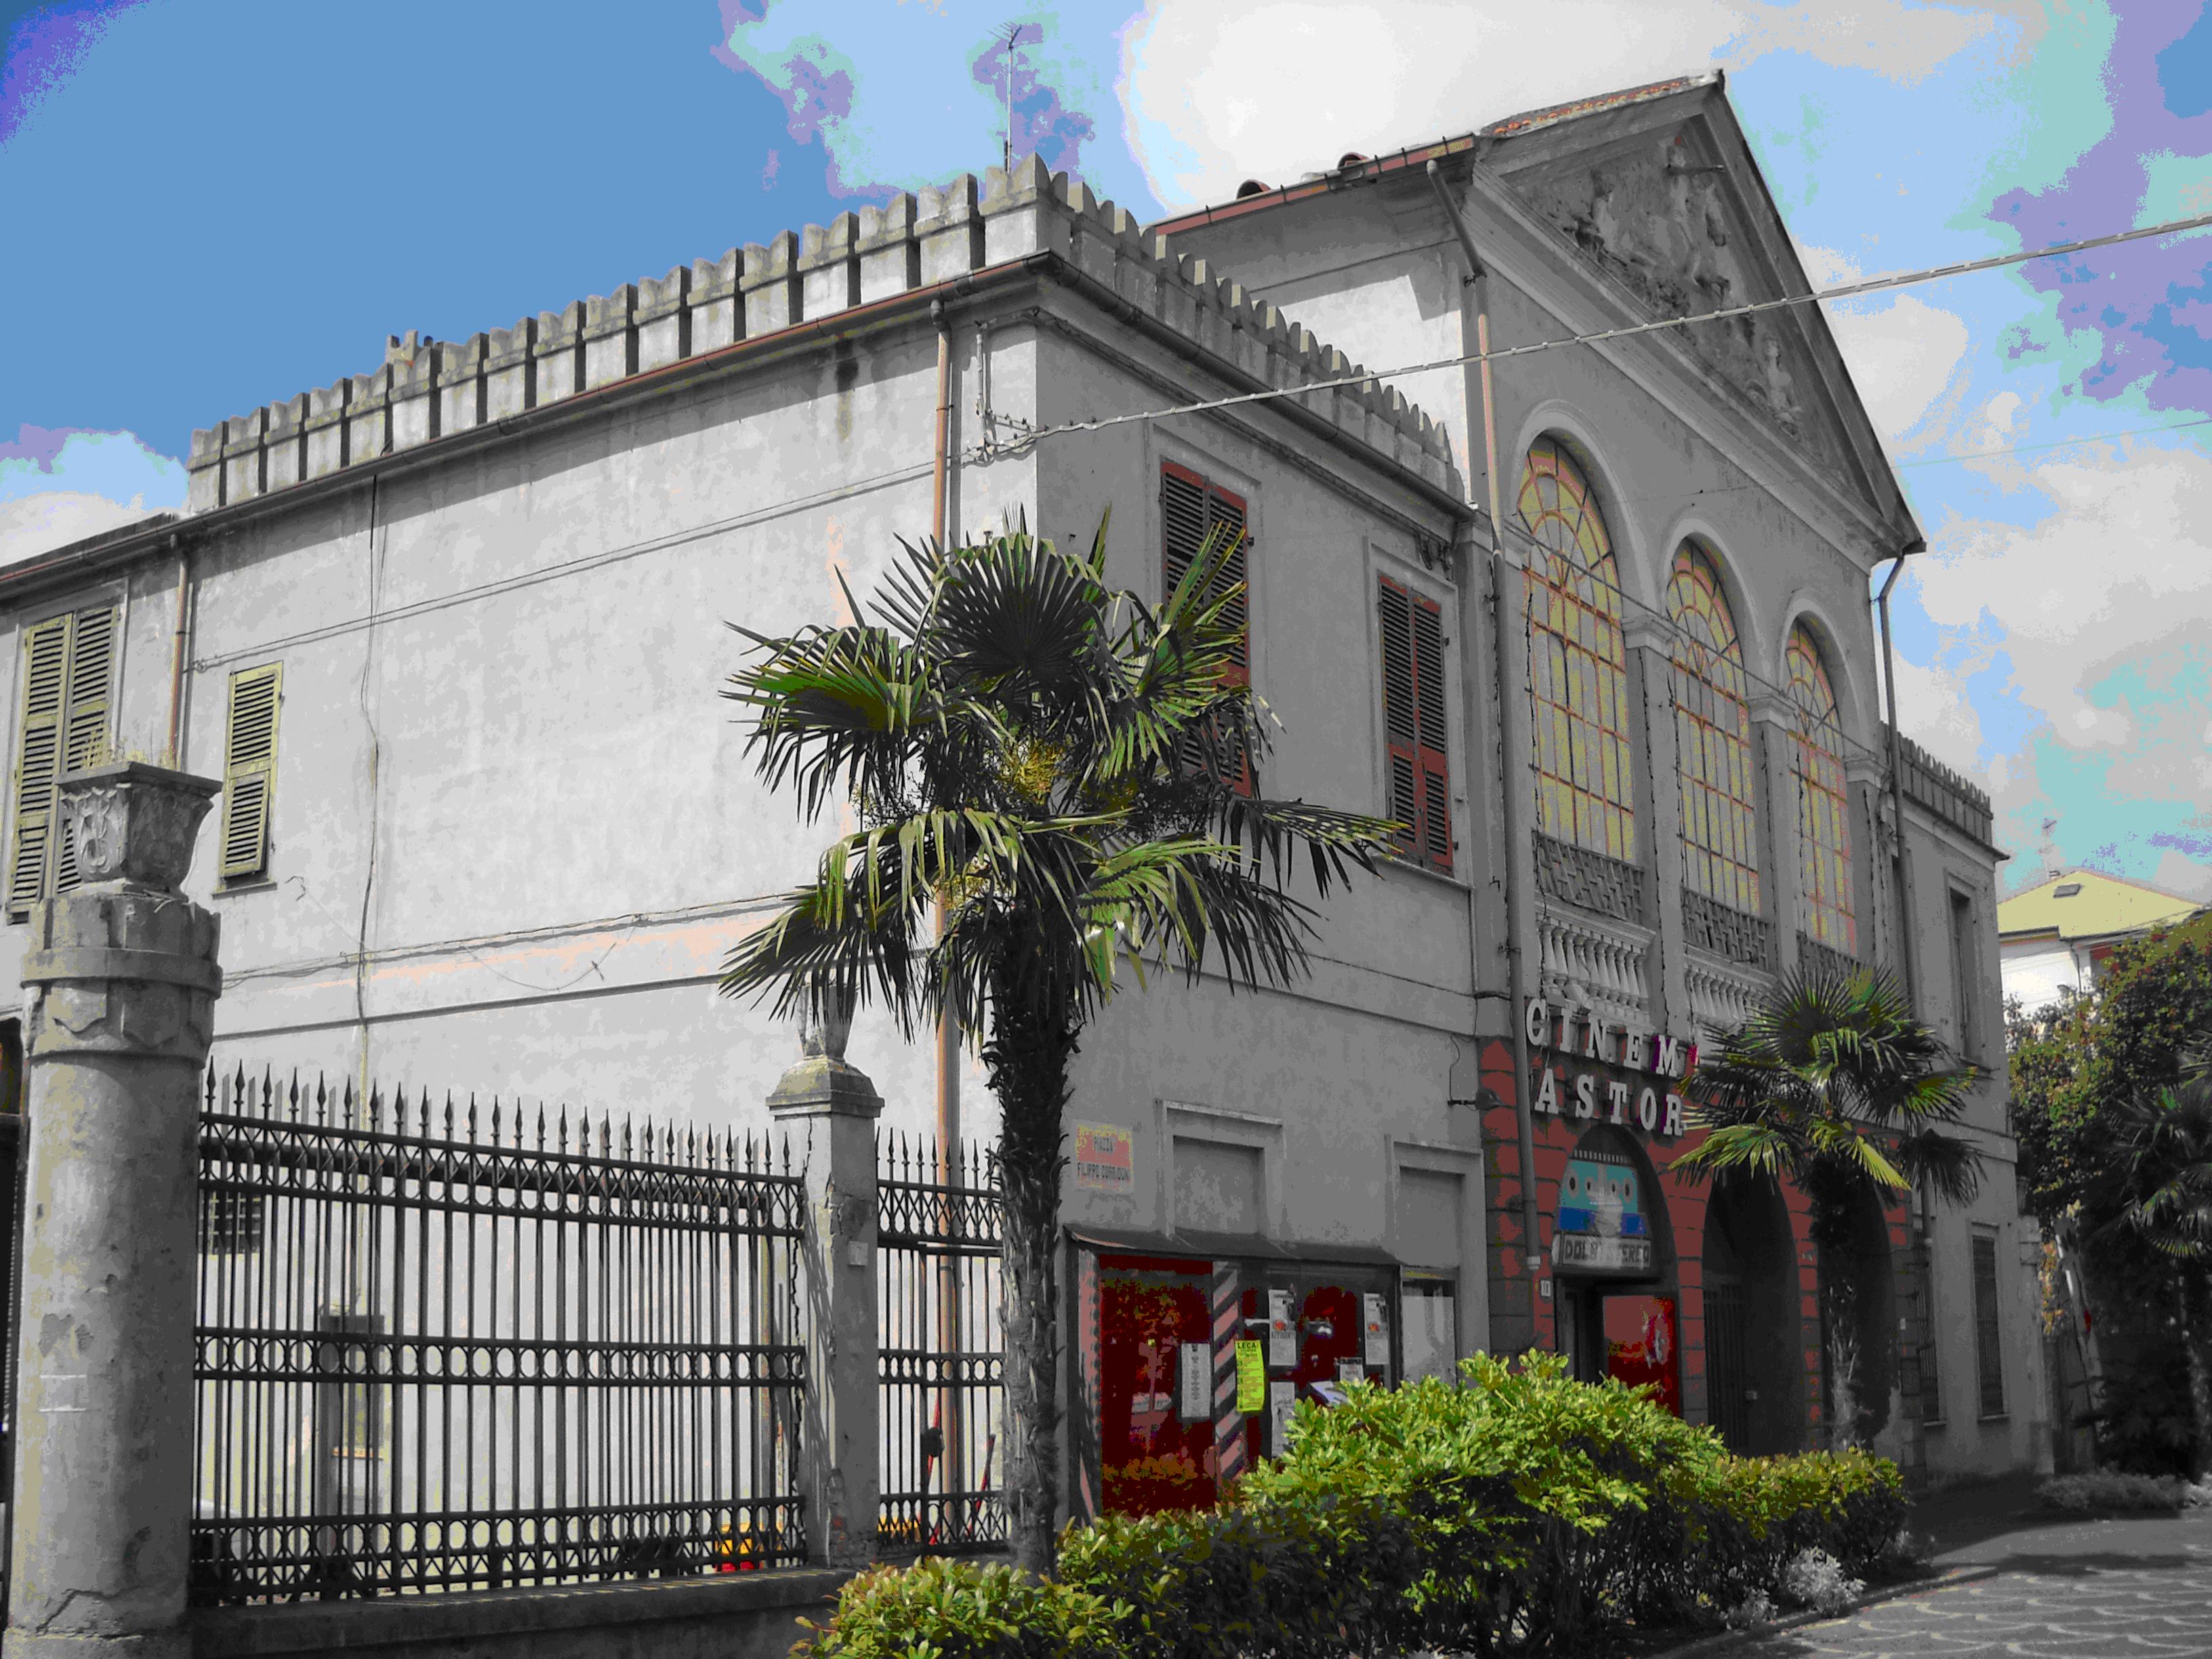 Ex Cinema Teatro Astor e area limitrofa (cinema) - Albenga (SV) 